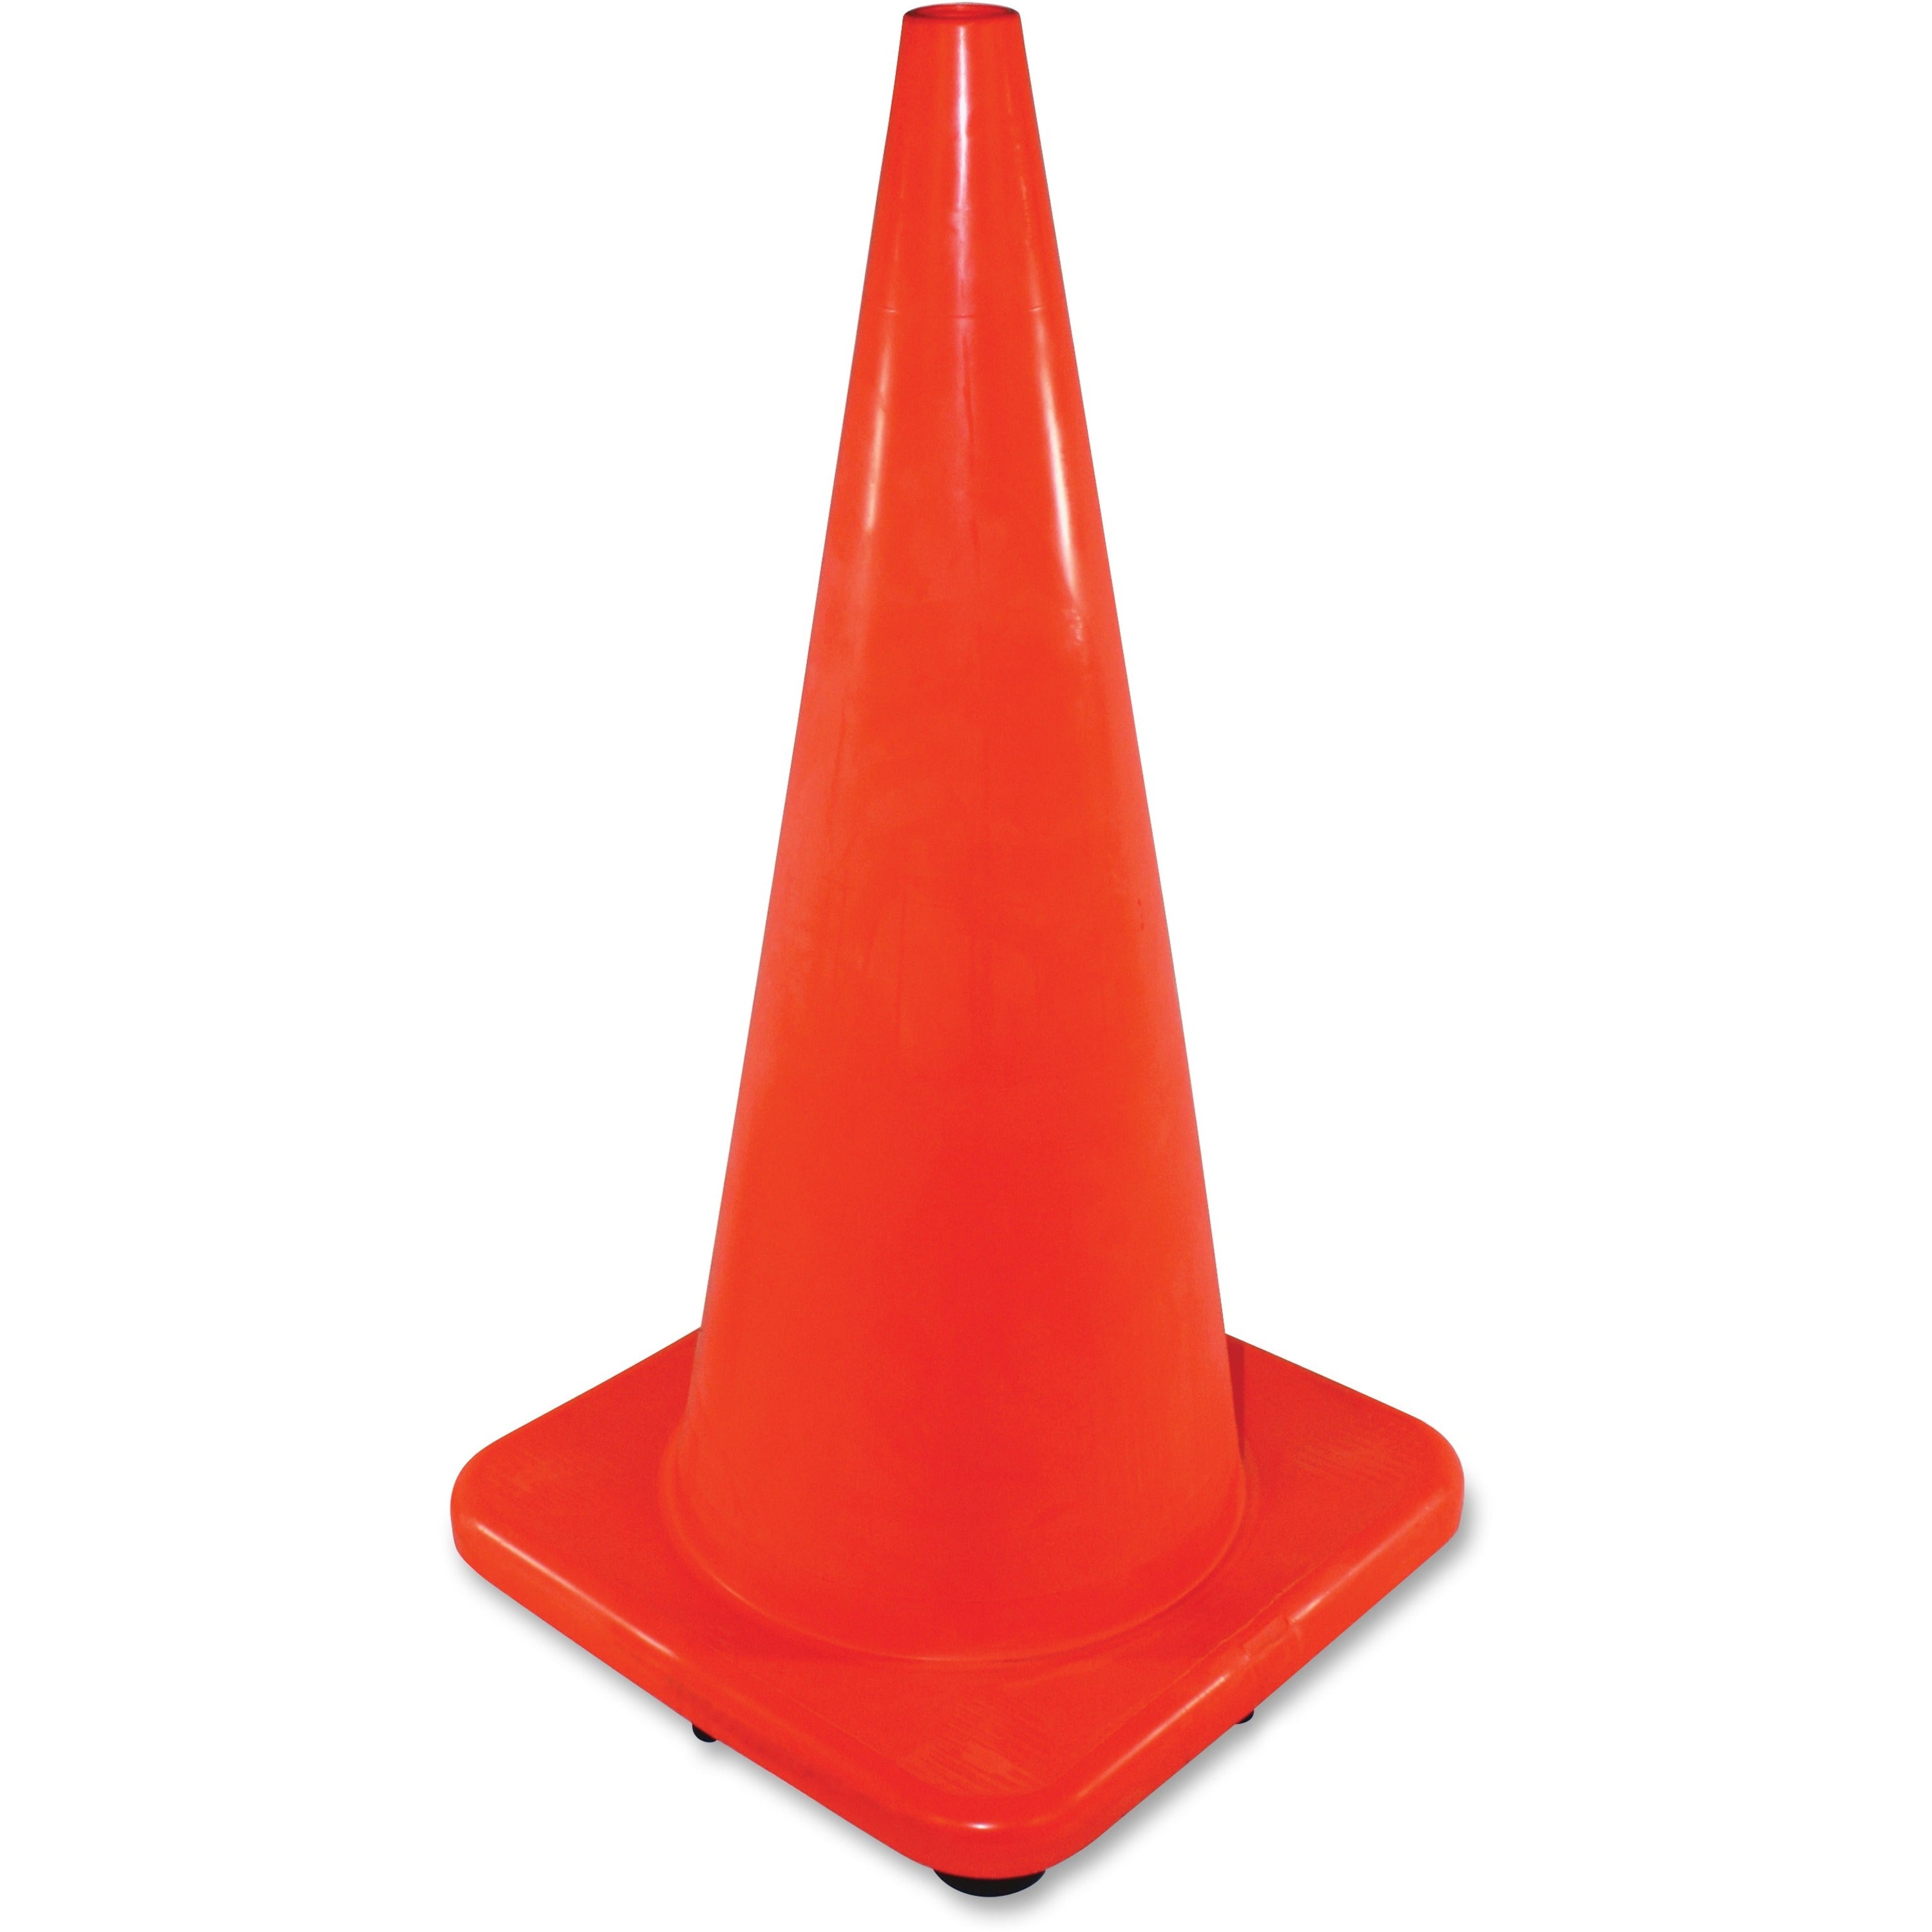 impact-slim-safety-cone-6-carton-517-width-x-28-height-cone-shape-rugged-orange_imp7309ct - 1